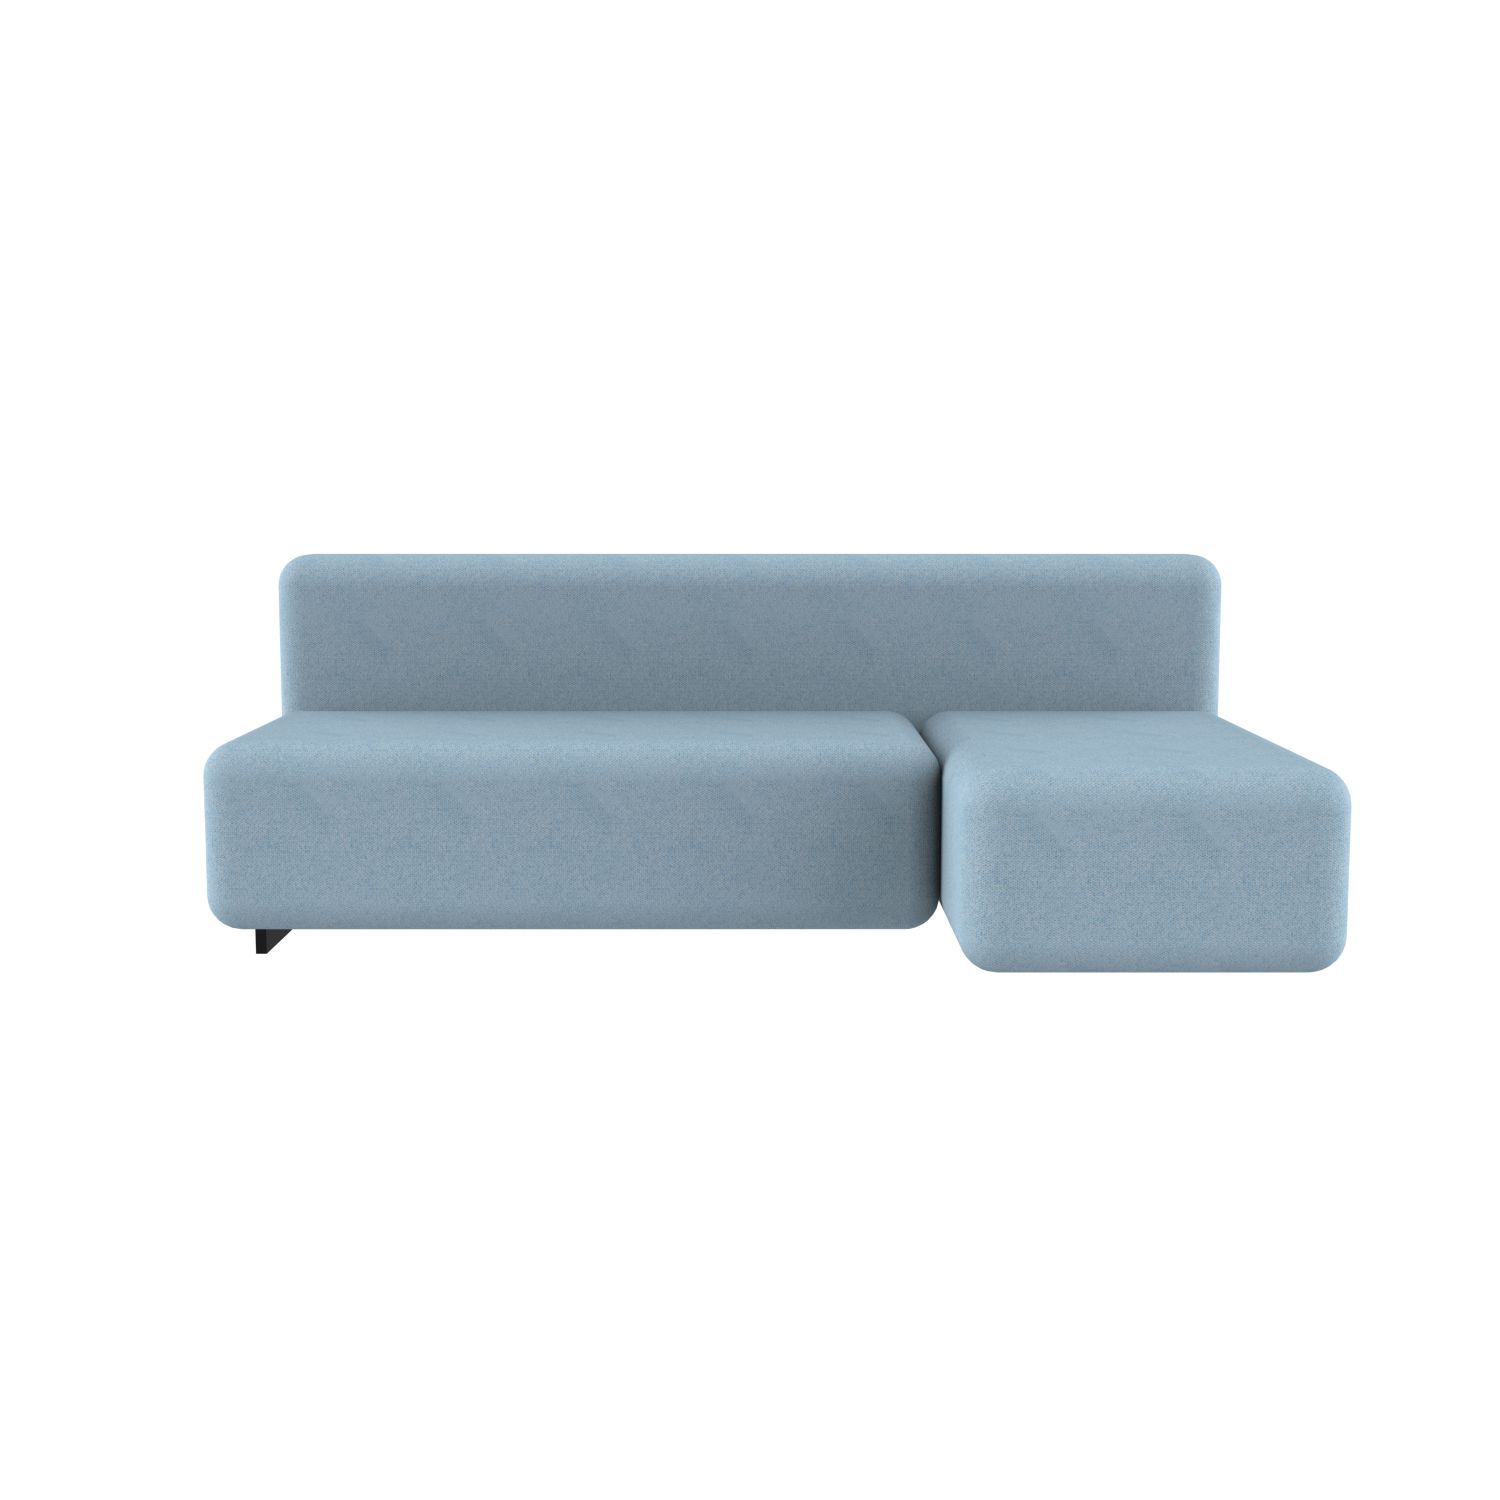 lensvelt fabio novembre balance lounger right without armrest moss pastel blue 40 black ral9005